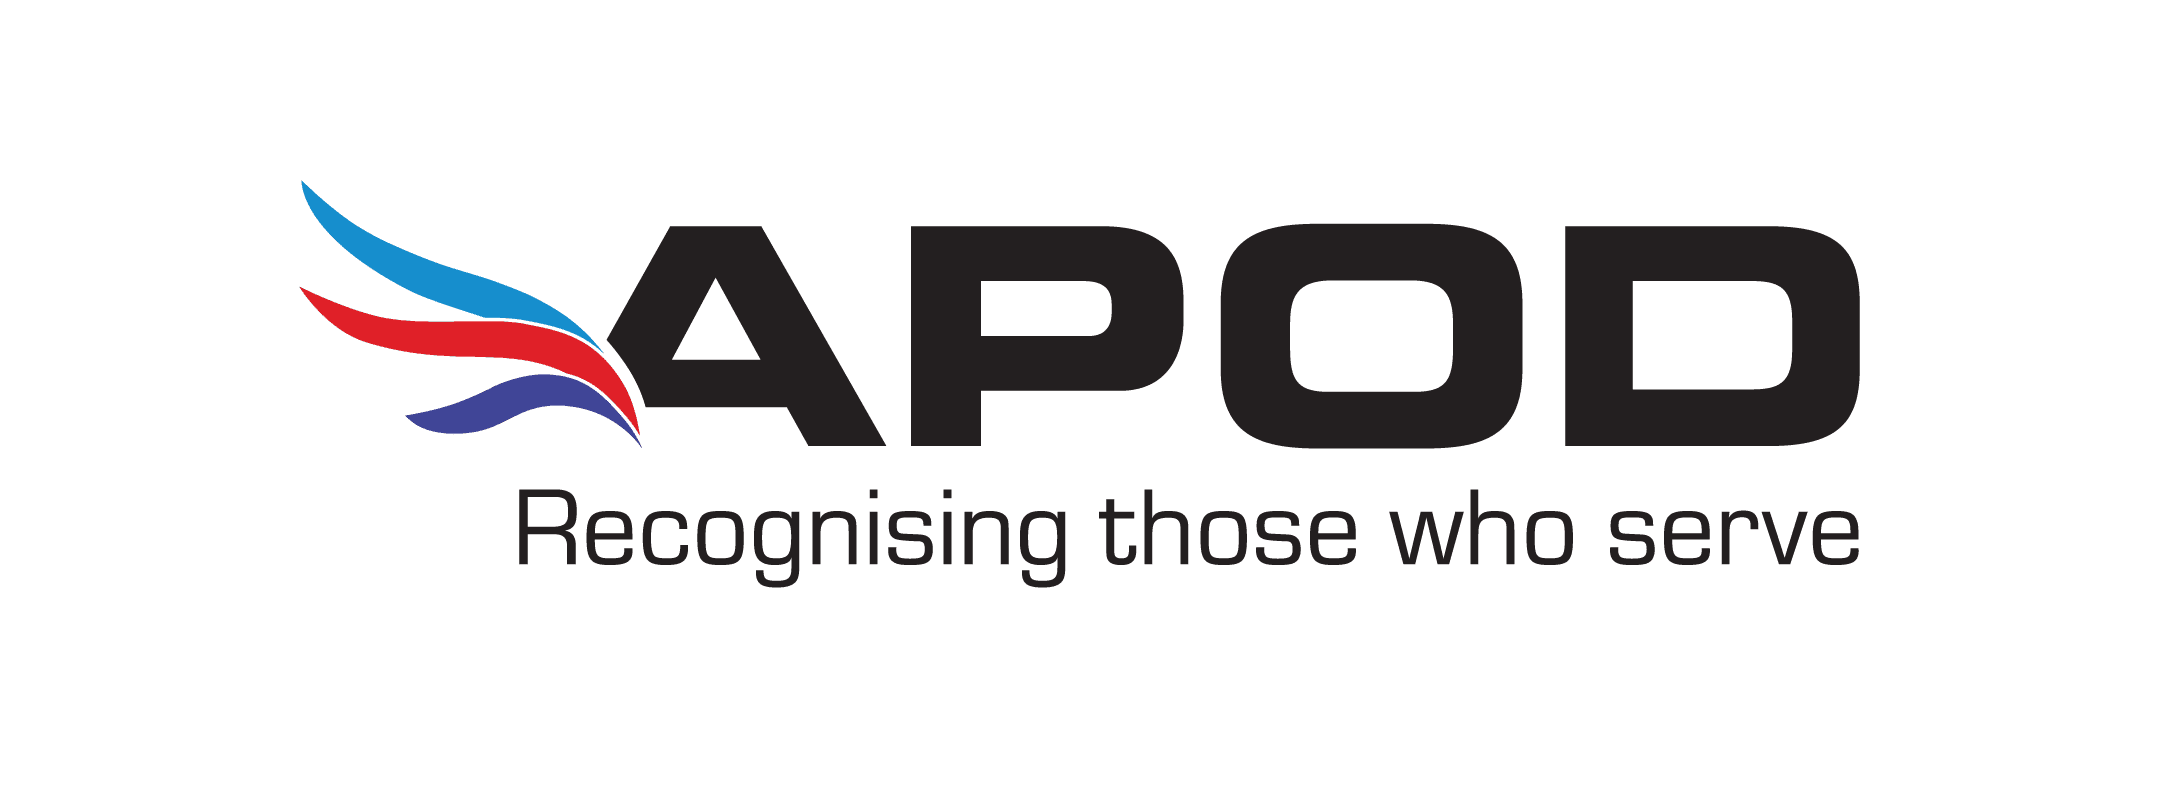 APOD_logo_tagline (1)